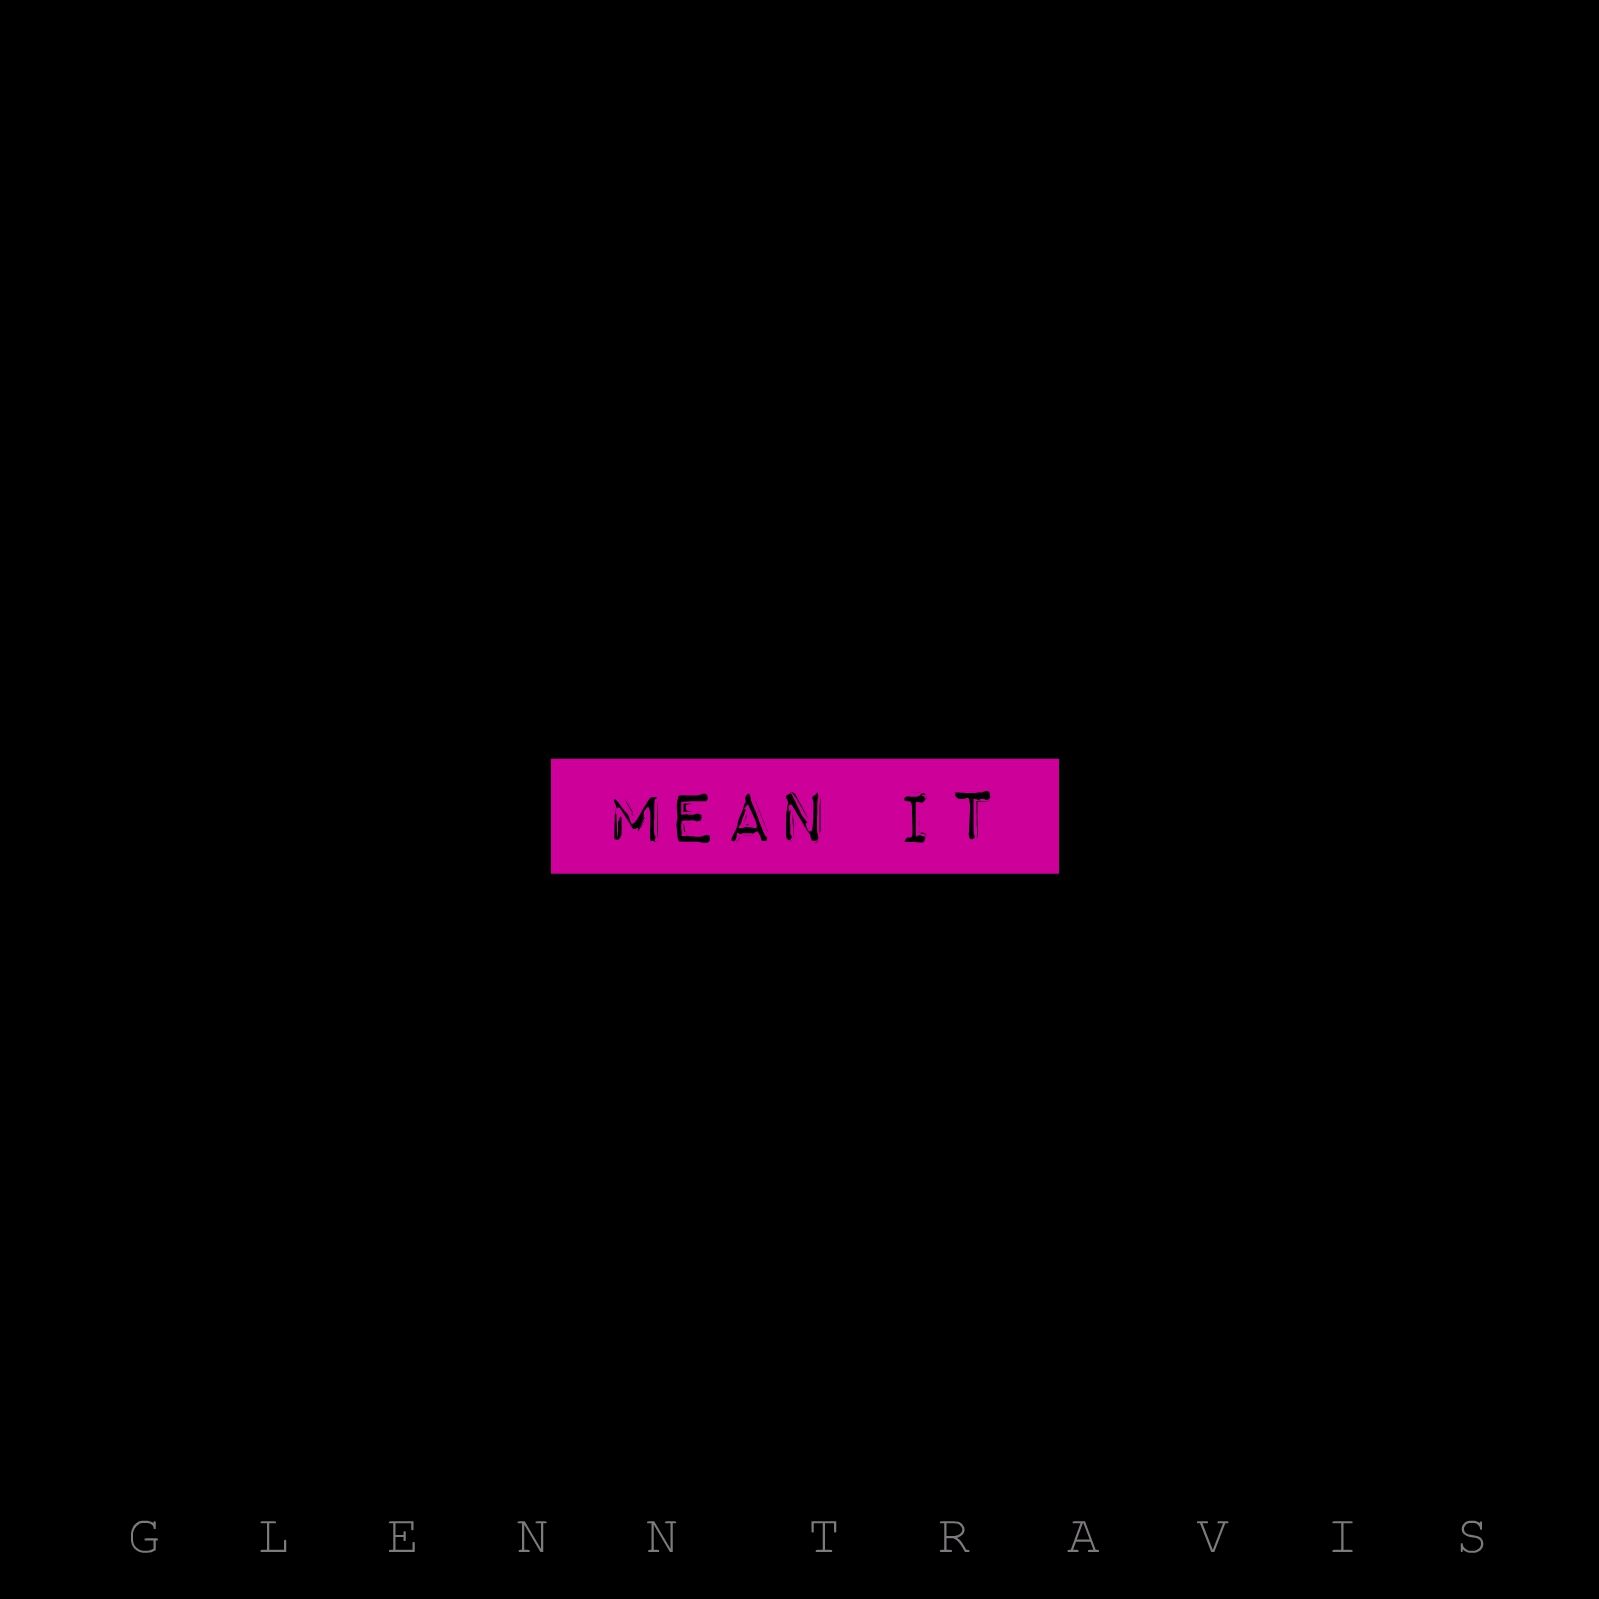 Glenn Travis – “Mean It”